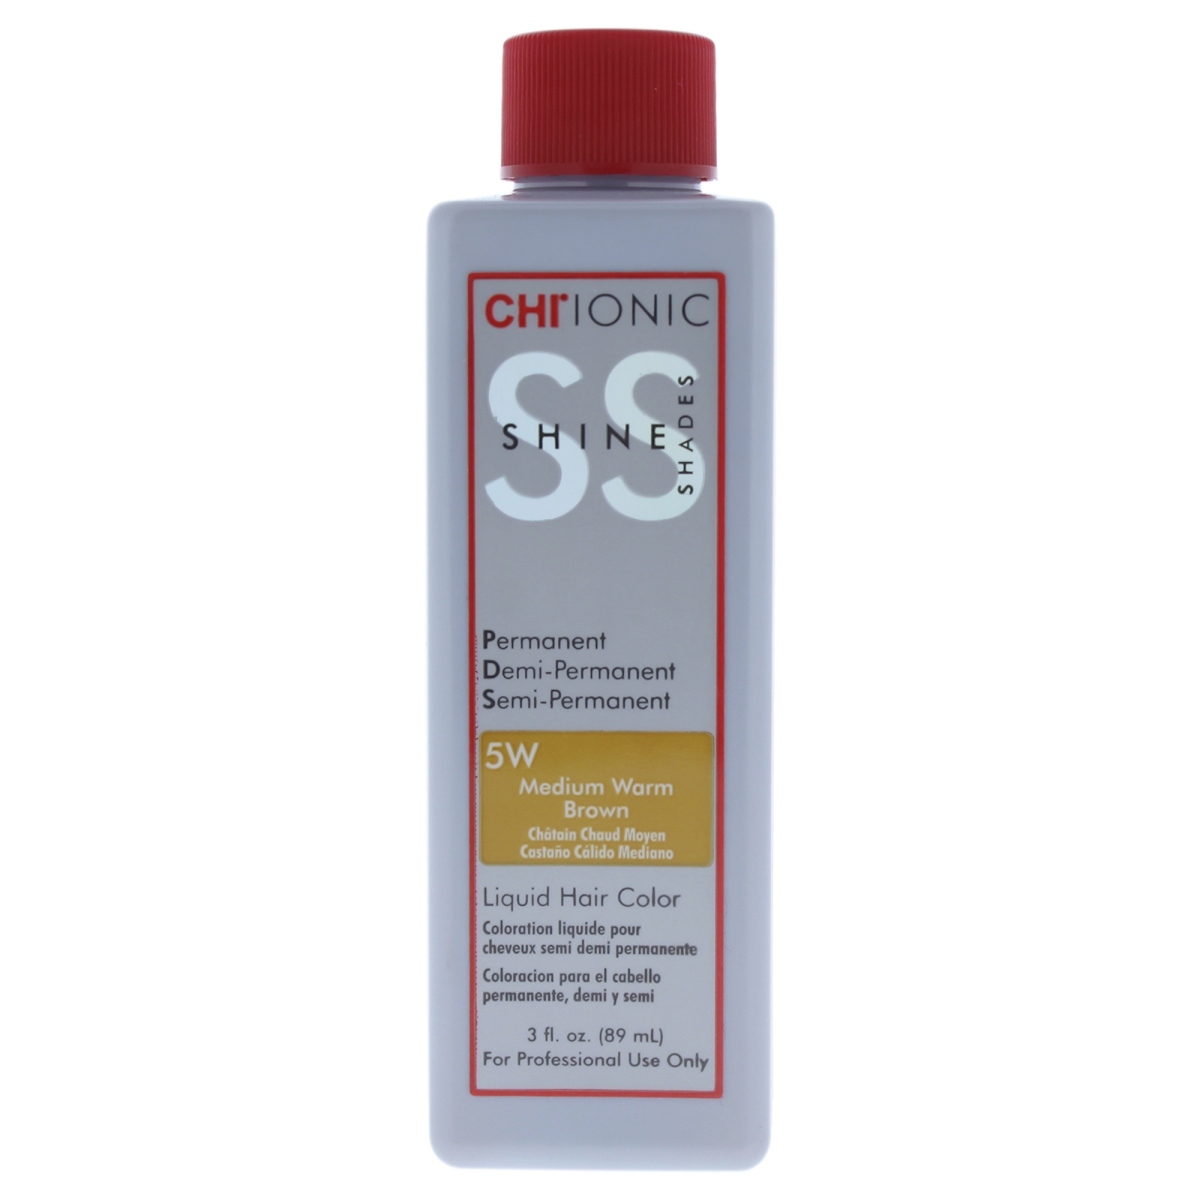 I0084028 Ionic Shine Shades Liquid Hair Color For Unisex - 5w Medium Warm Brown - 3 Oz